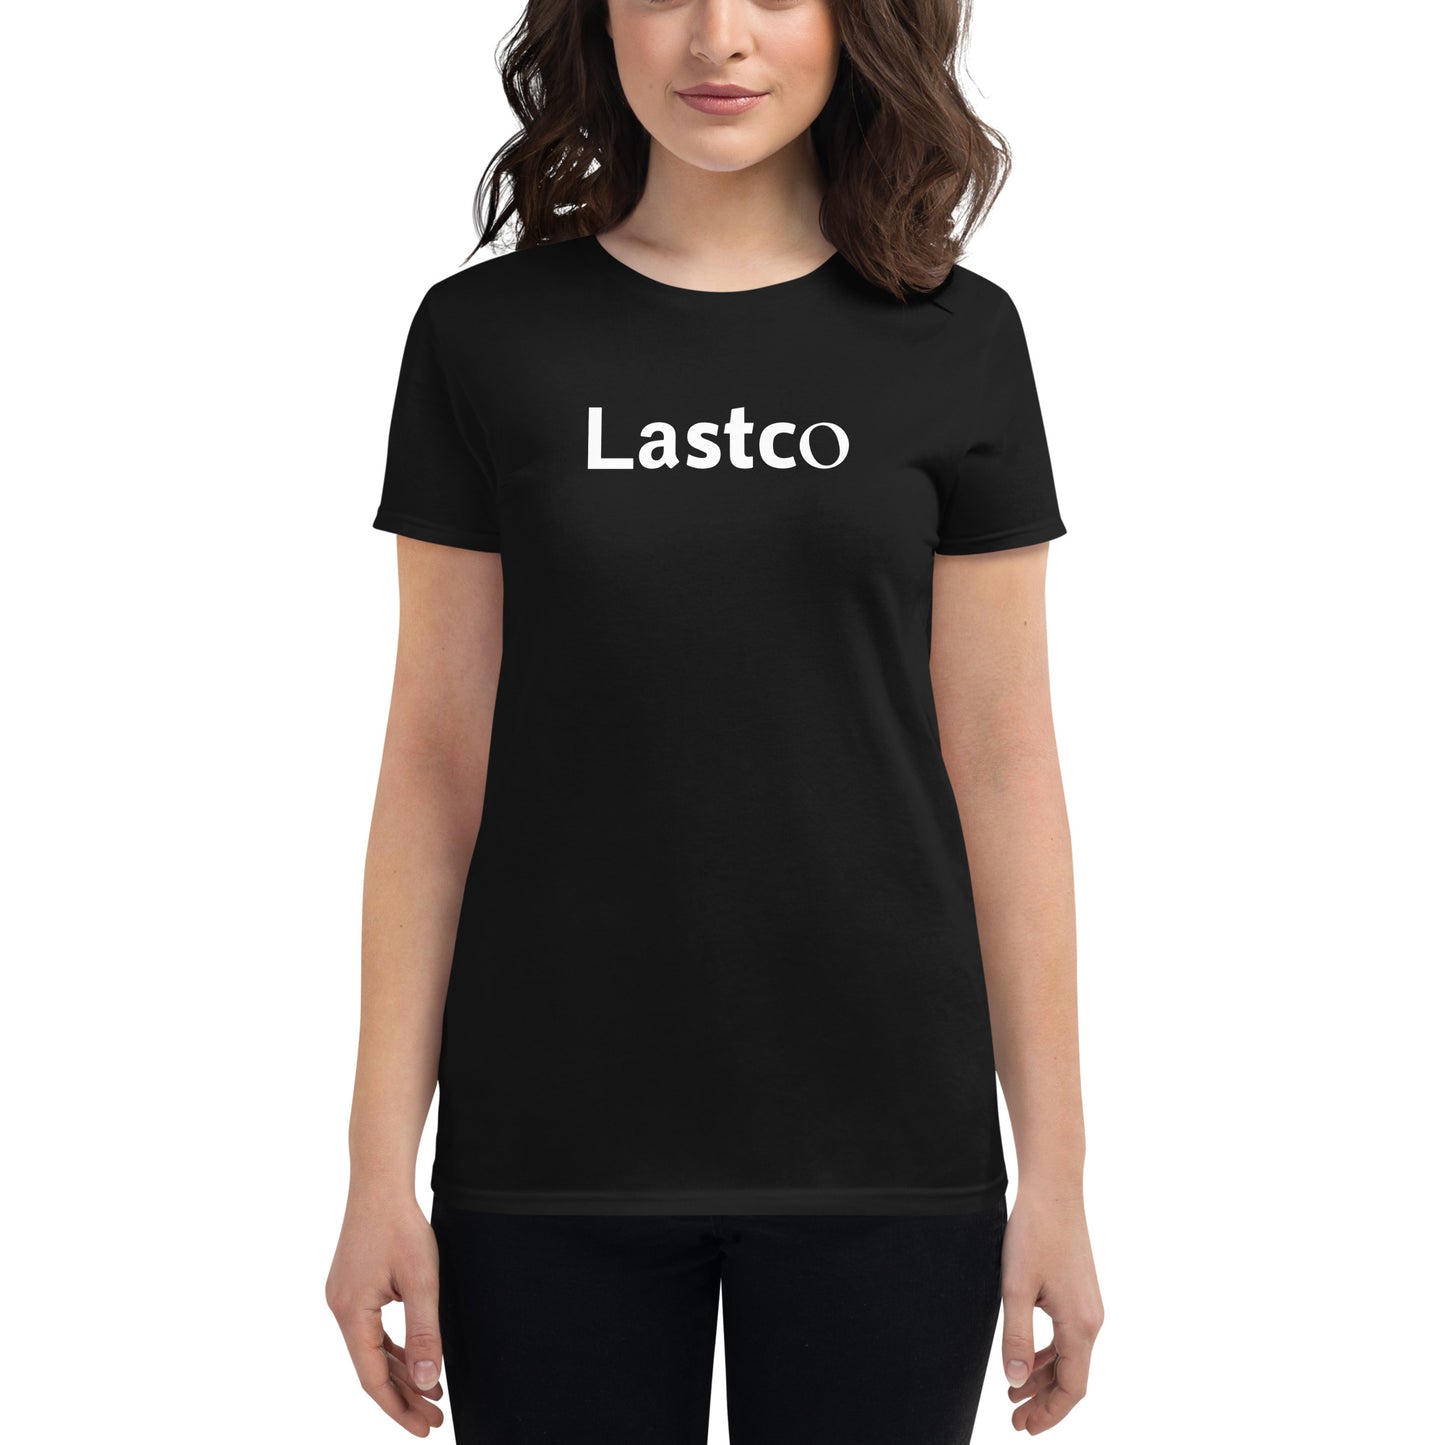 Lastco Mansplaining Repellant Women's short sleeve t-shirt